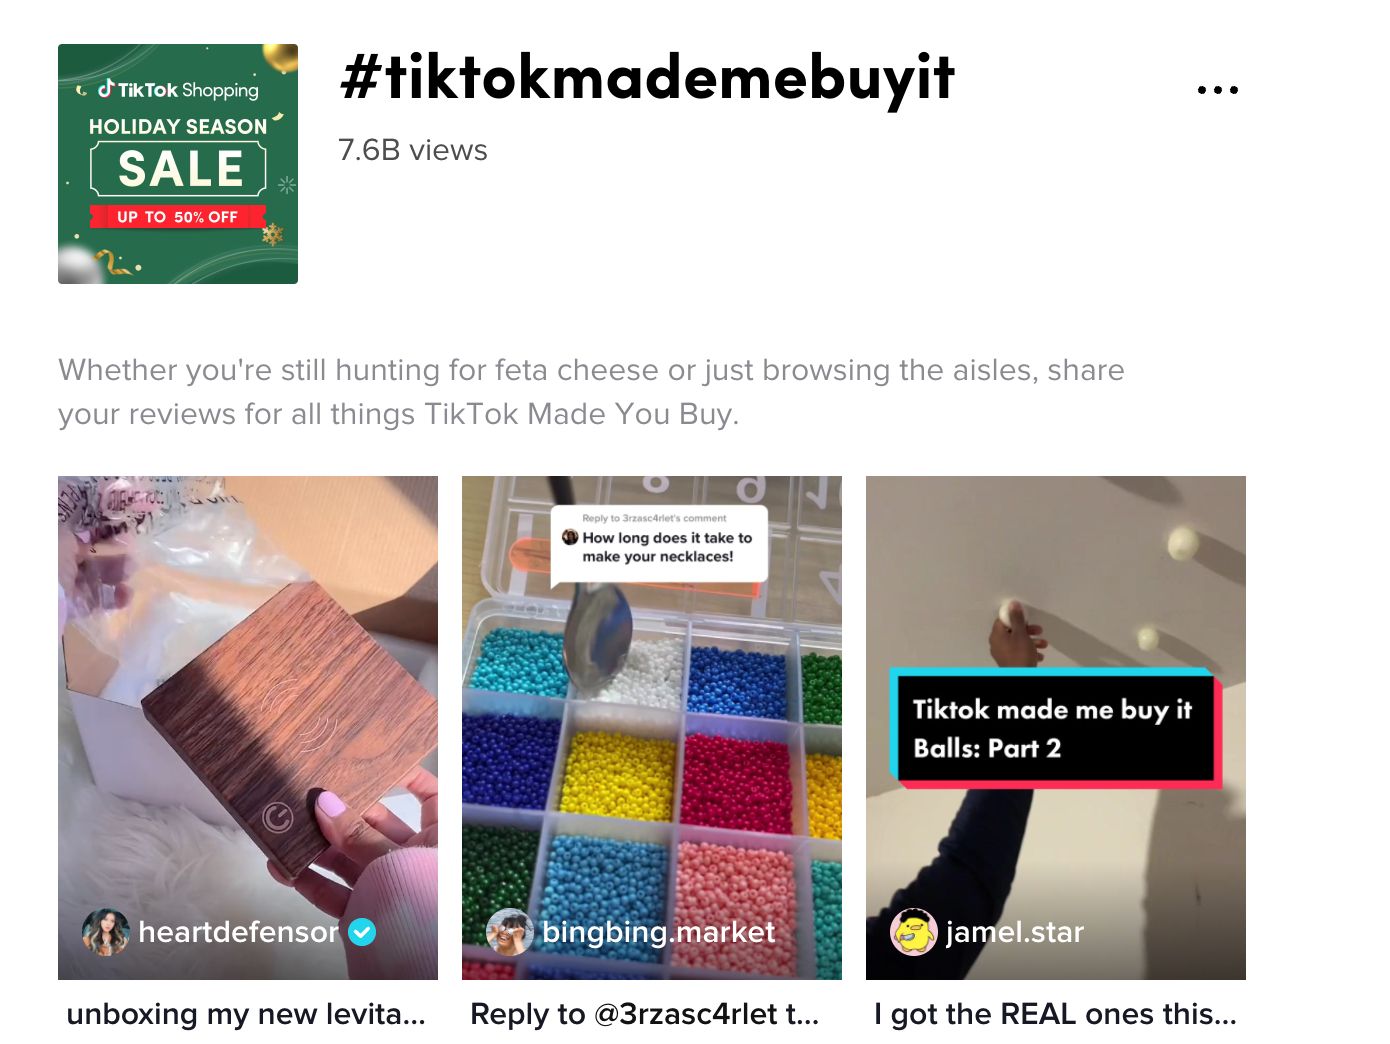 #Tiktokmademebuyit is a huge part of TikTok for Ecommerce. 